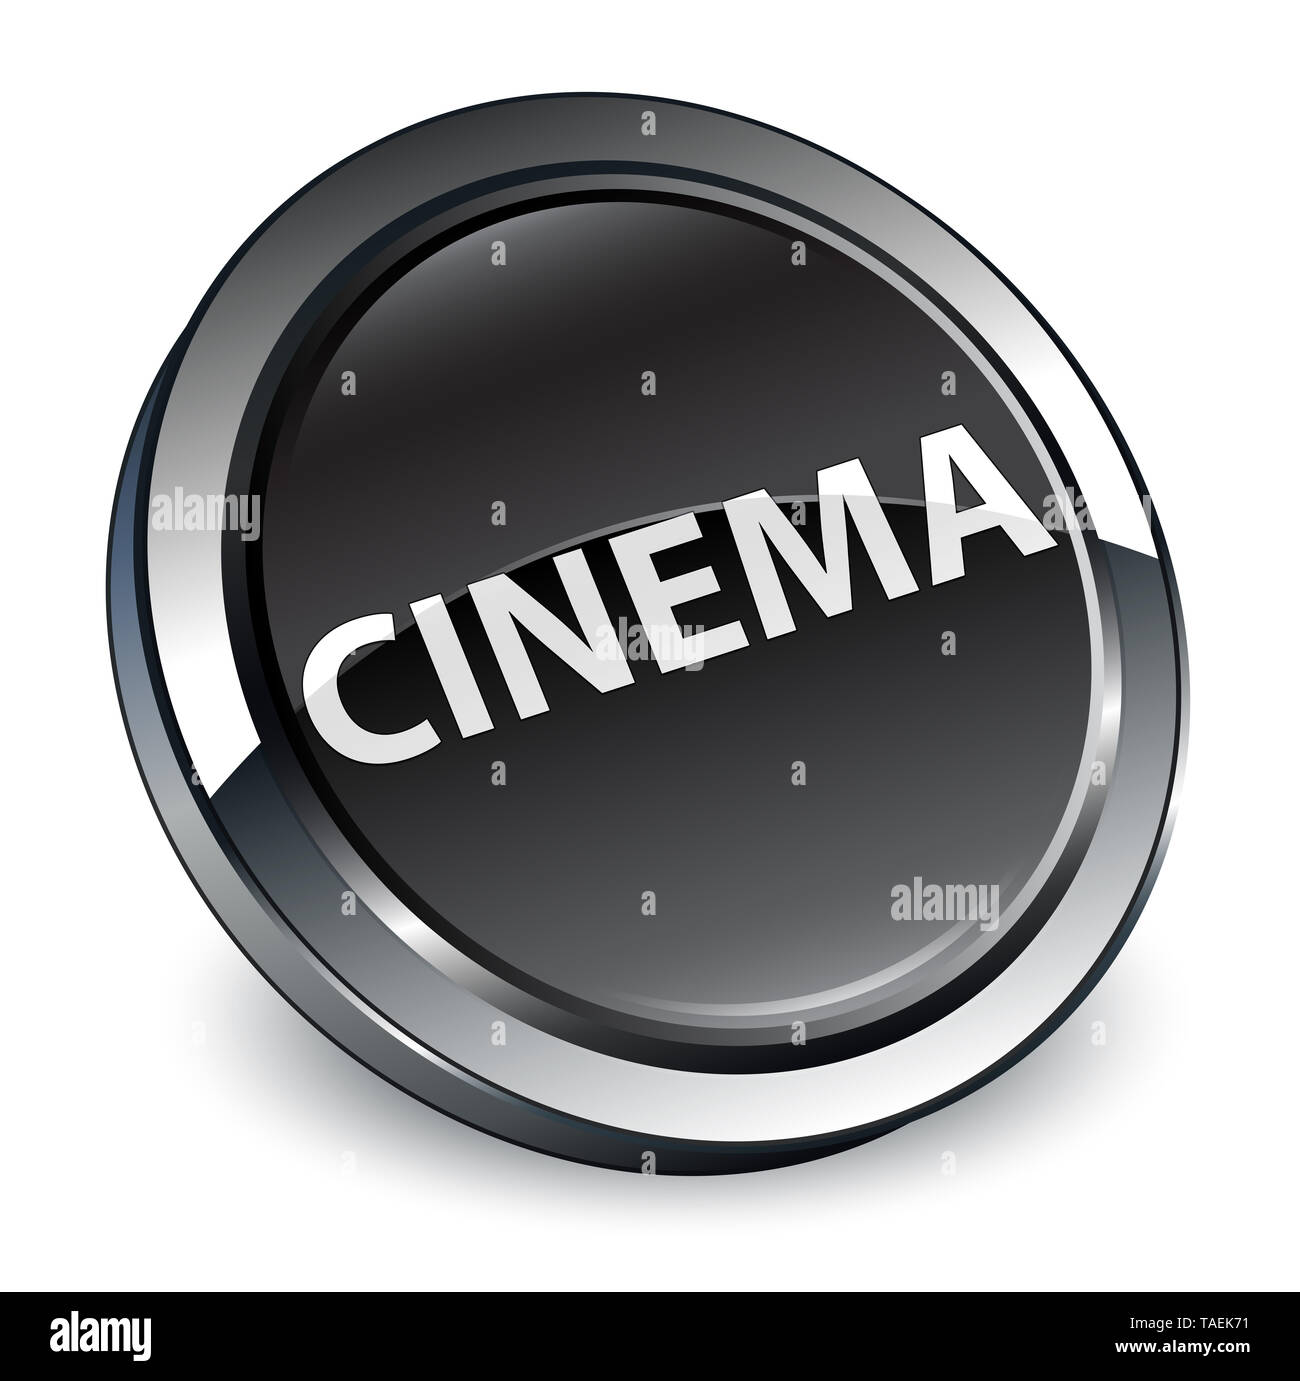 Cinema isolated on 3d black round button abstract illustration Stock Photo